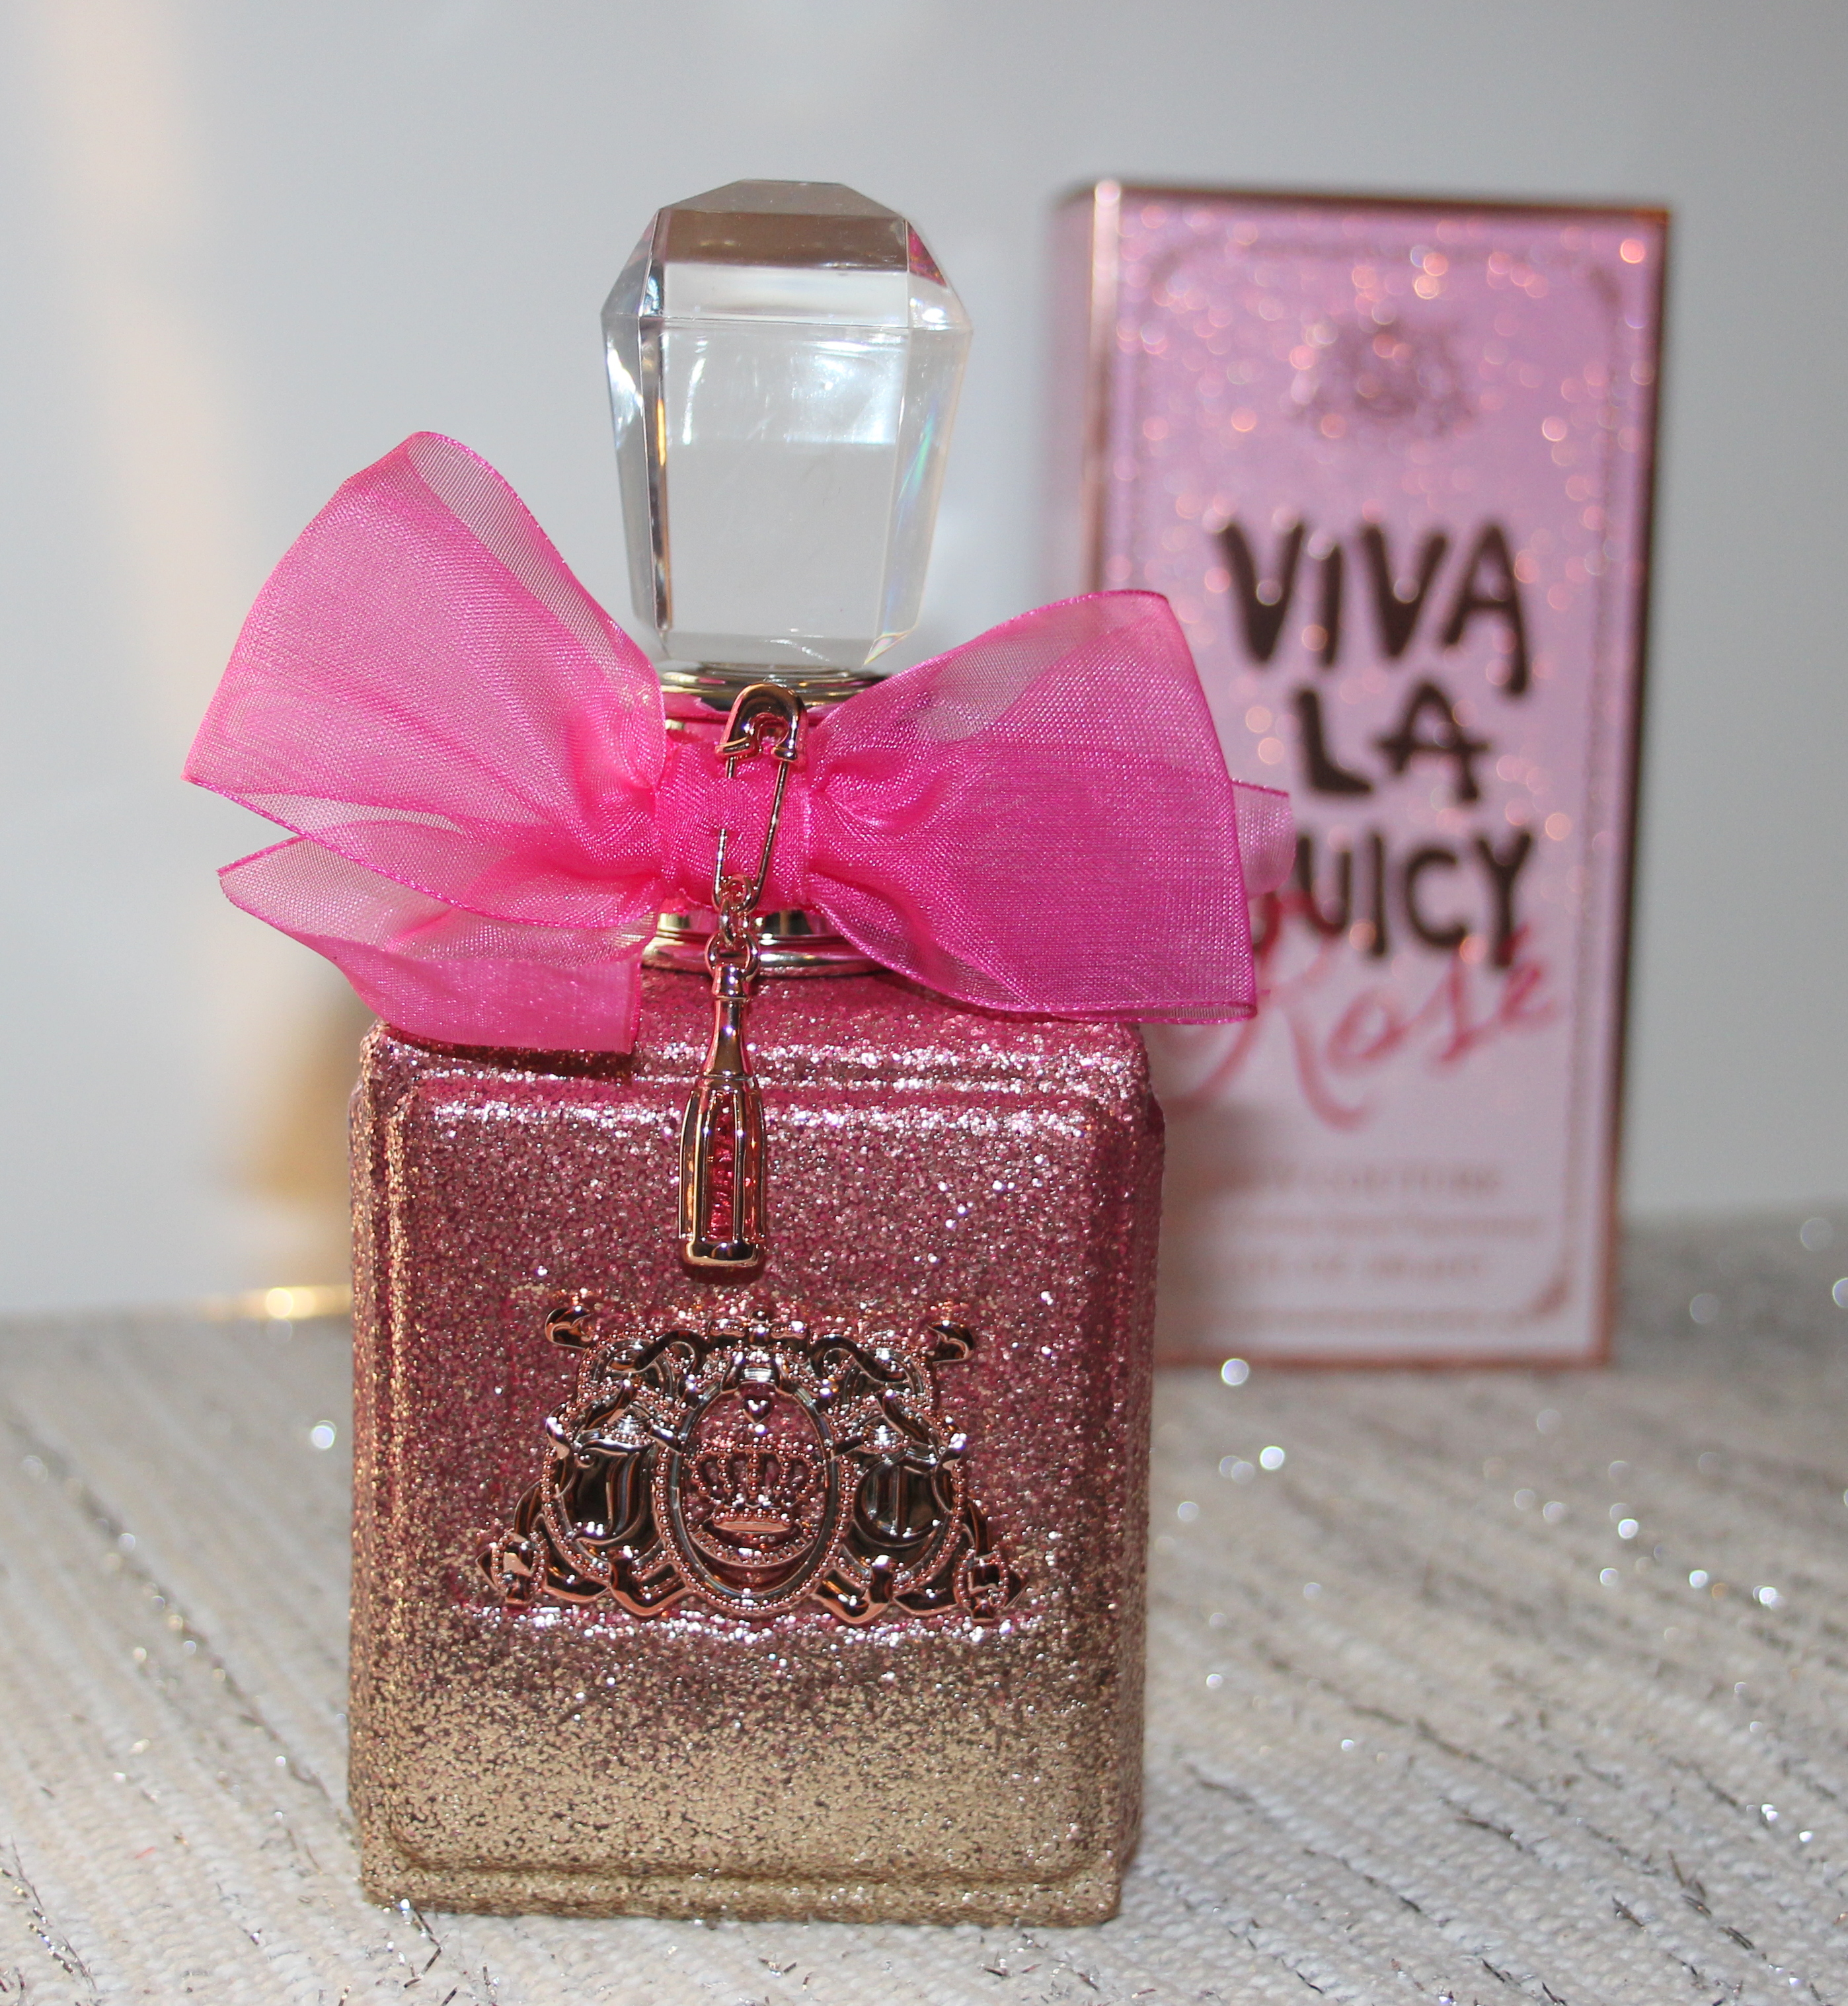 Viva la Juicy Rosé Eau de Parfum - My Highest Self